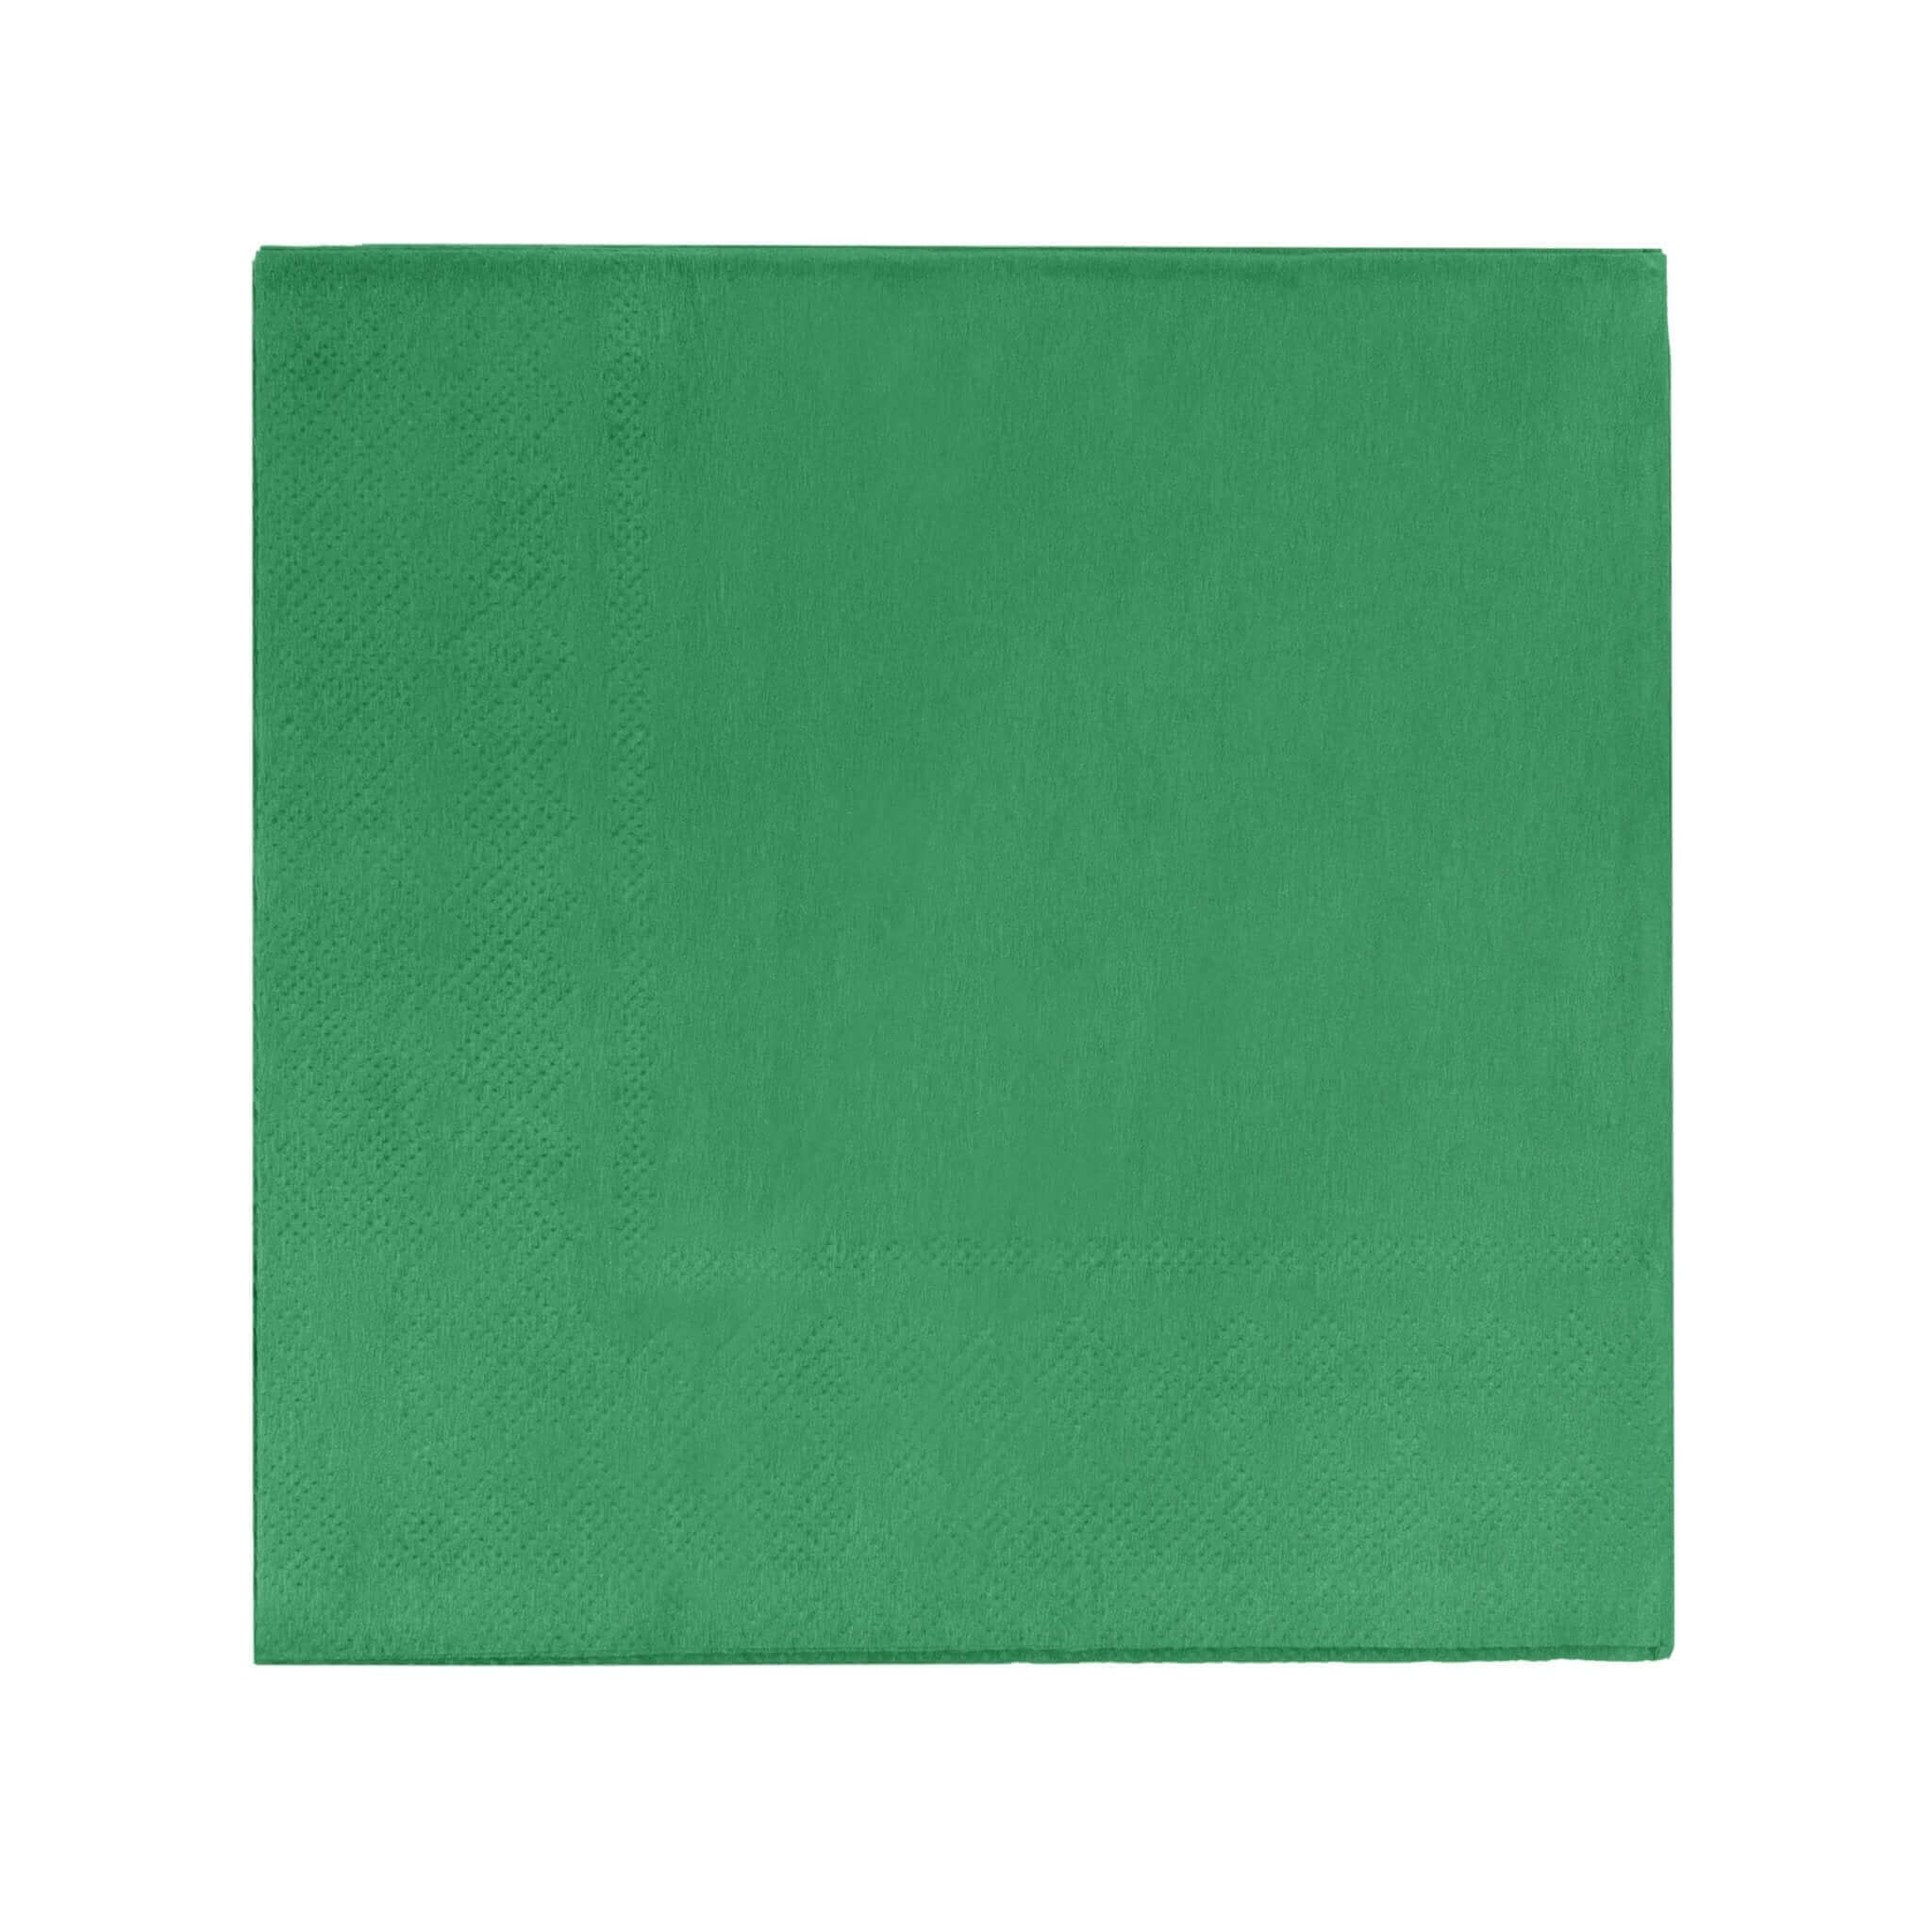 Emerald Green Luncheon Napkins | 3600 Pack - Yom Tov Settings